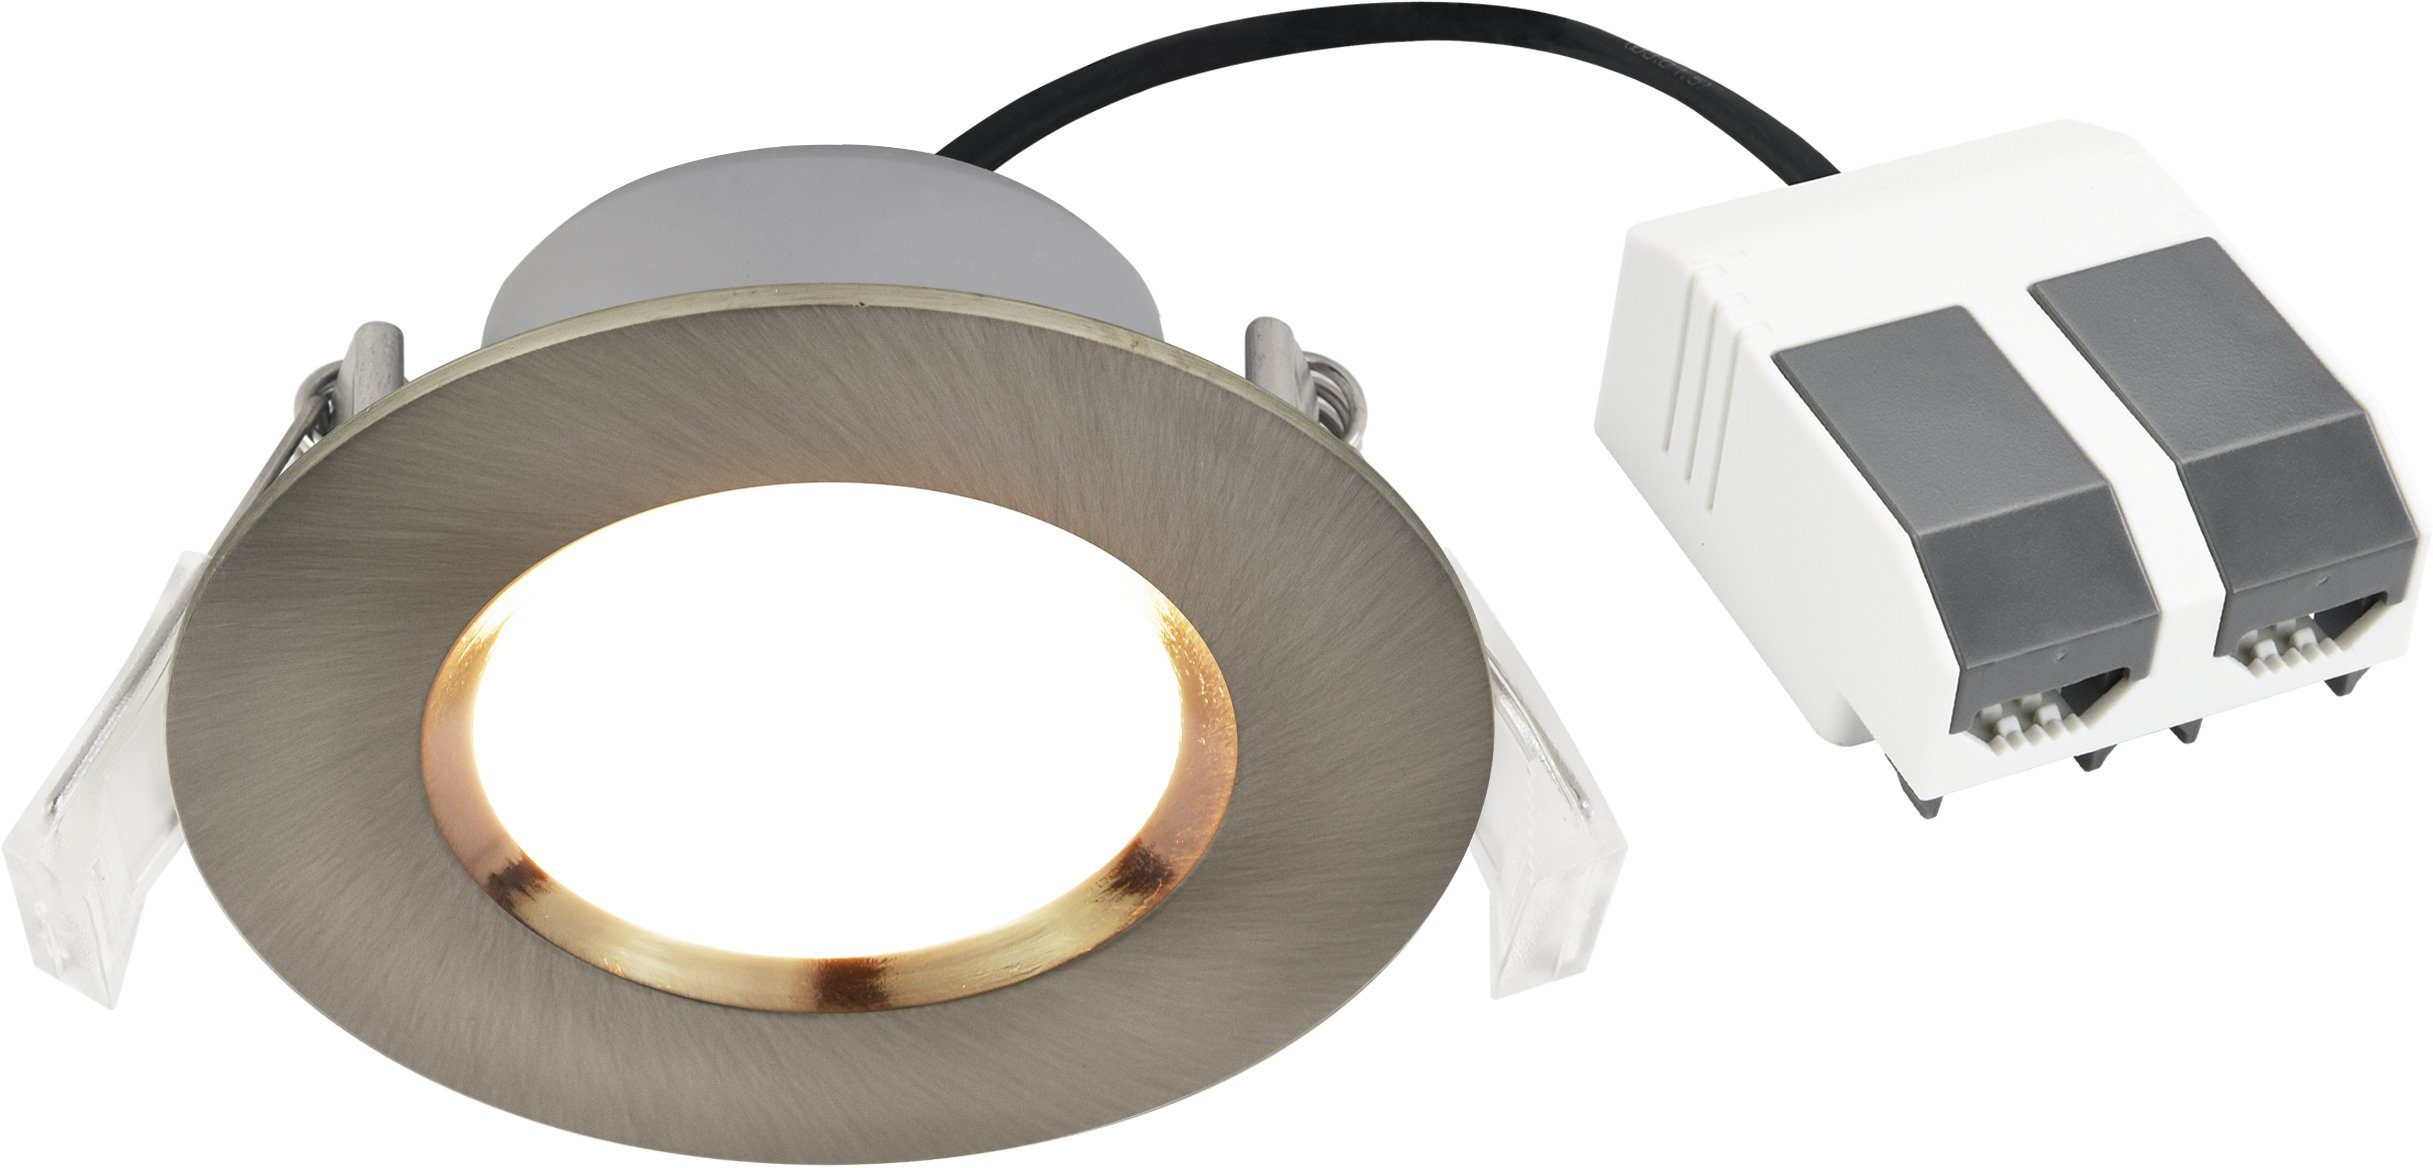 Nordlux Deckenstrahler Siege, LED fest integriert, Warmweiß, inkl. 4,7W LED,  345 Lumen, IP65, inkl. 4,7W Led mit 345 Lumen